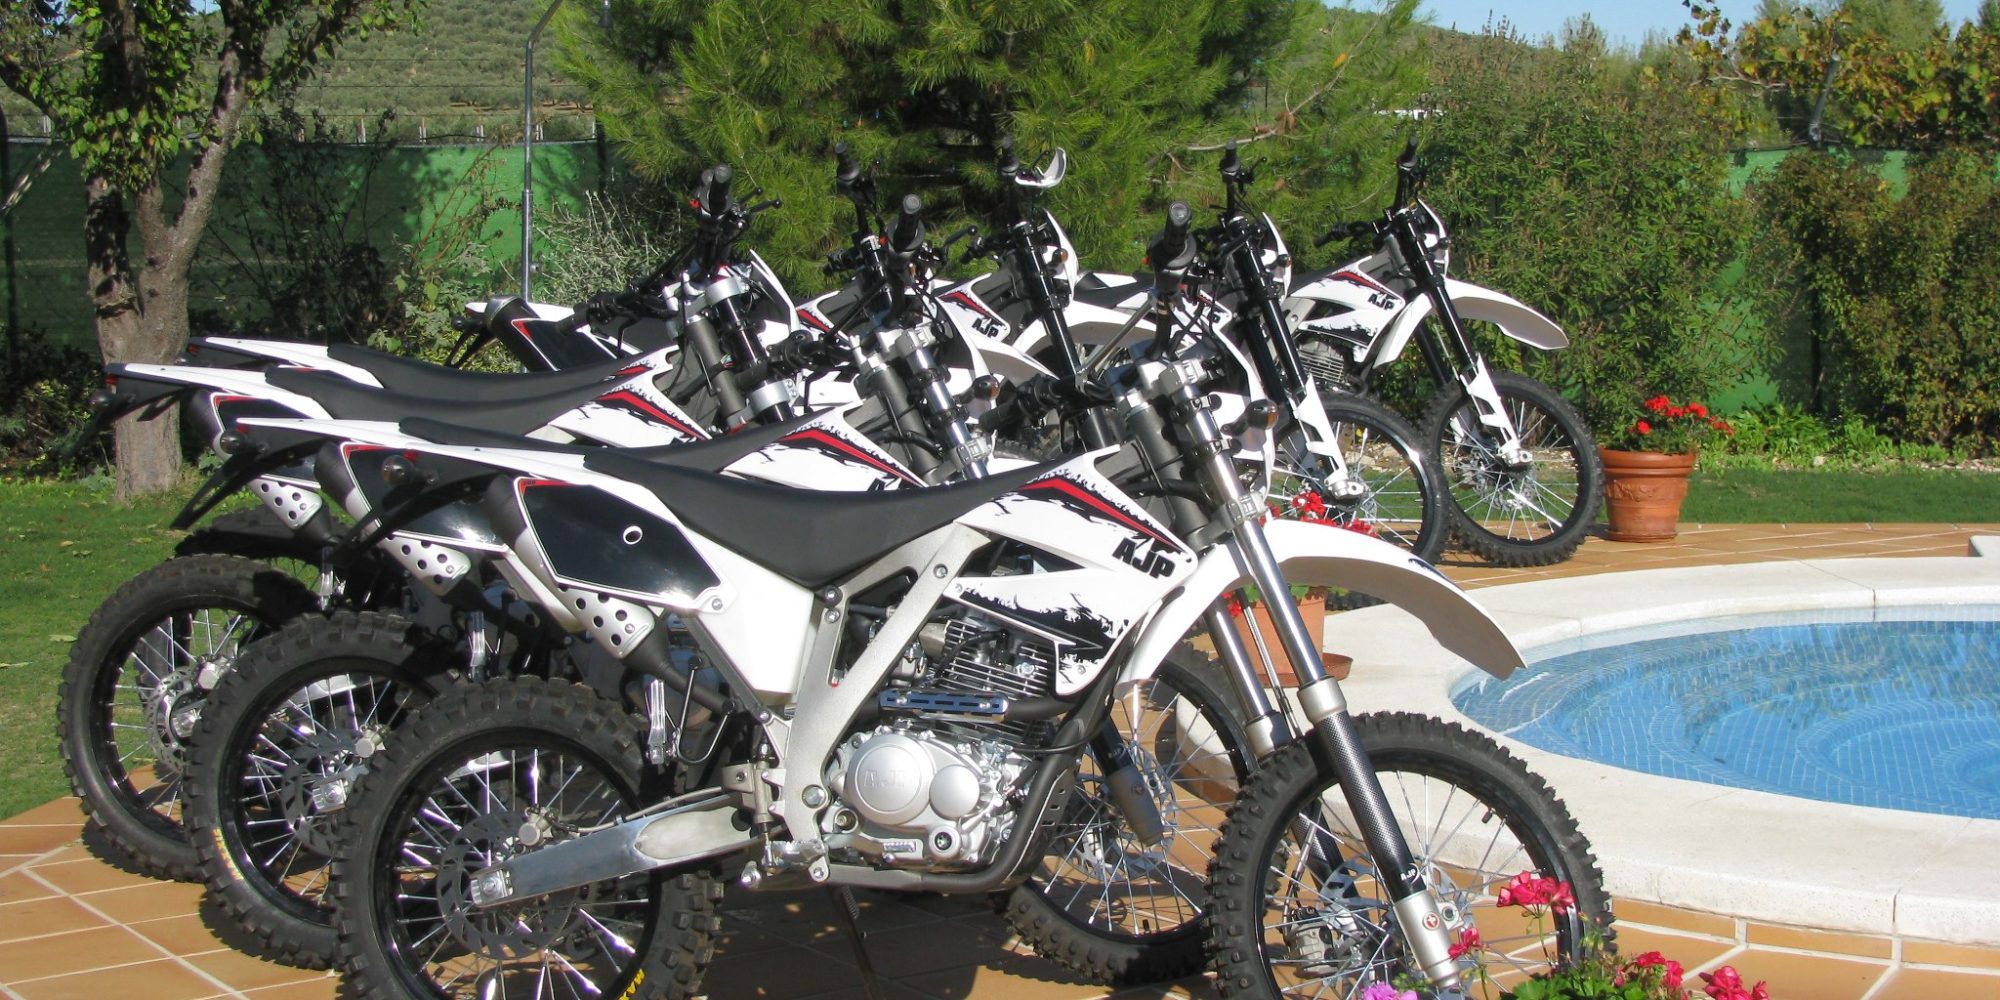 motorcycle tours malaga spain